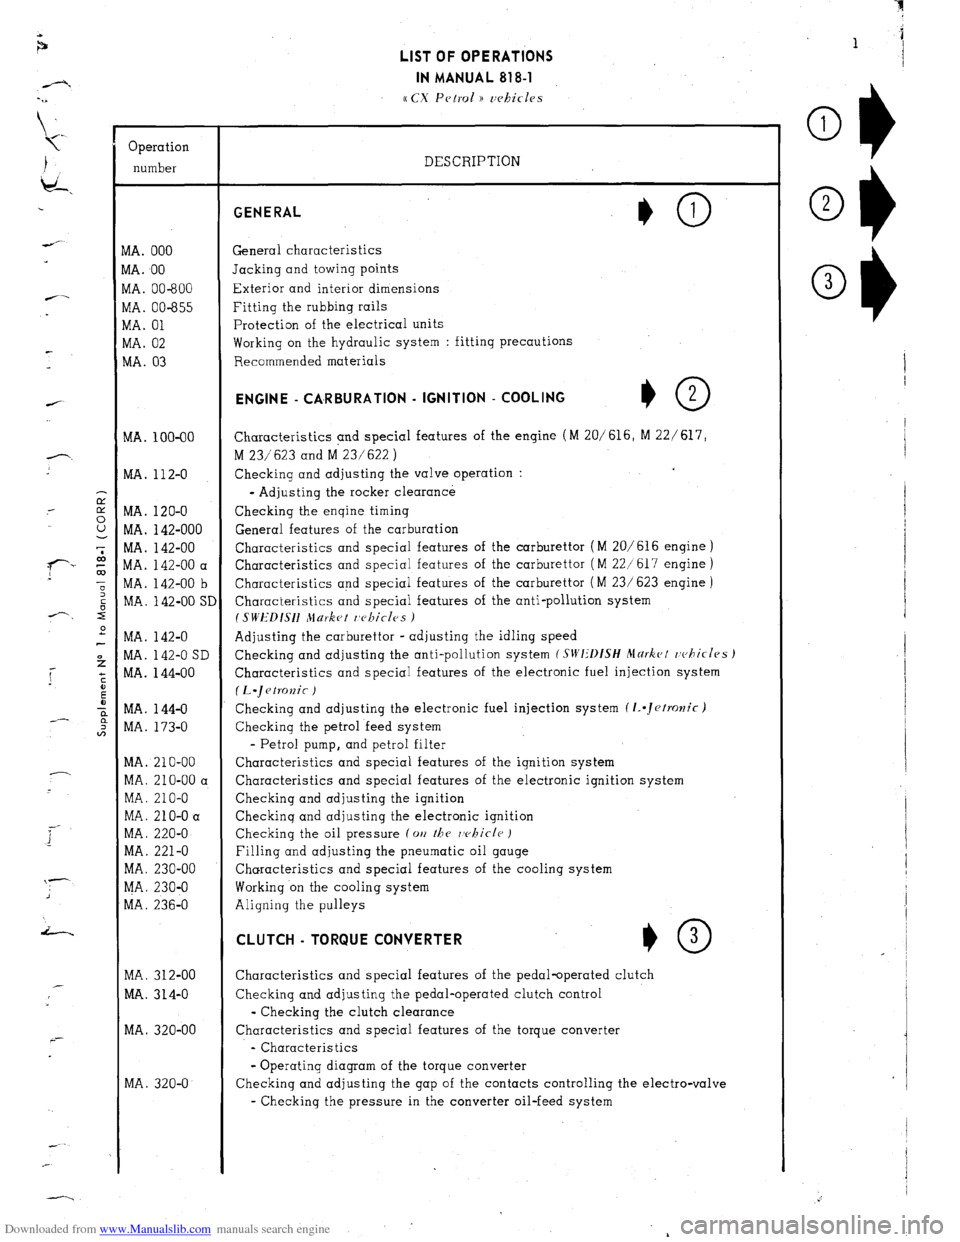 Citroen CX 1974 1.G Workshop Manual Downloaded from www.Manualslib.com manuals search engine Operation 
number 
VIA. 000 
VIA. 00 
VIA. 00-600 
vlA. 00-655 
VIA. 01 
WA. 02 
MA. 03 
MA. 100-00 
MA. 112-O 
MA. 120-O 
MA. 142-000 
MA. 142